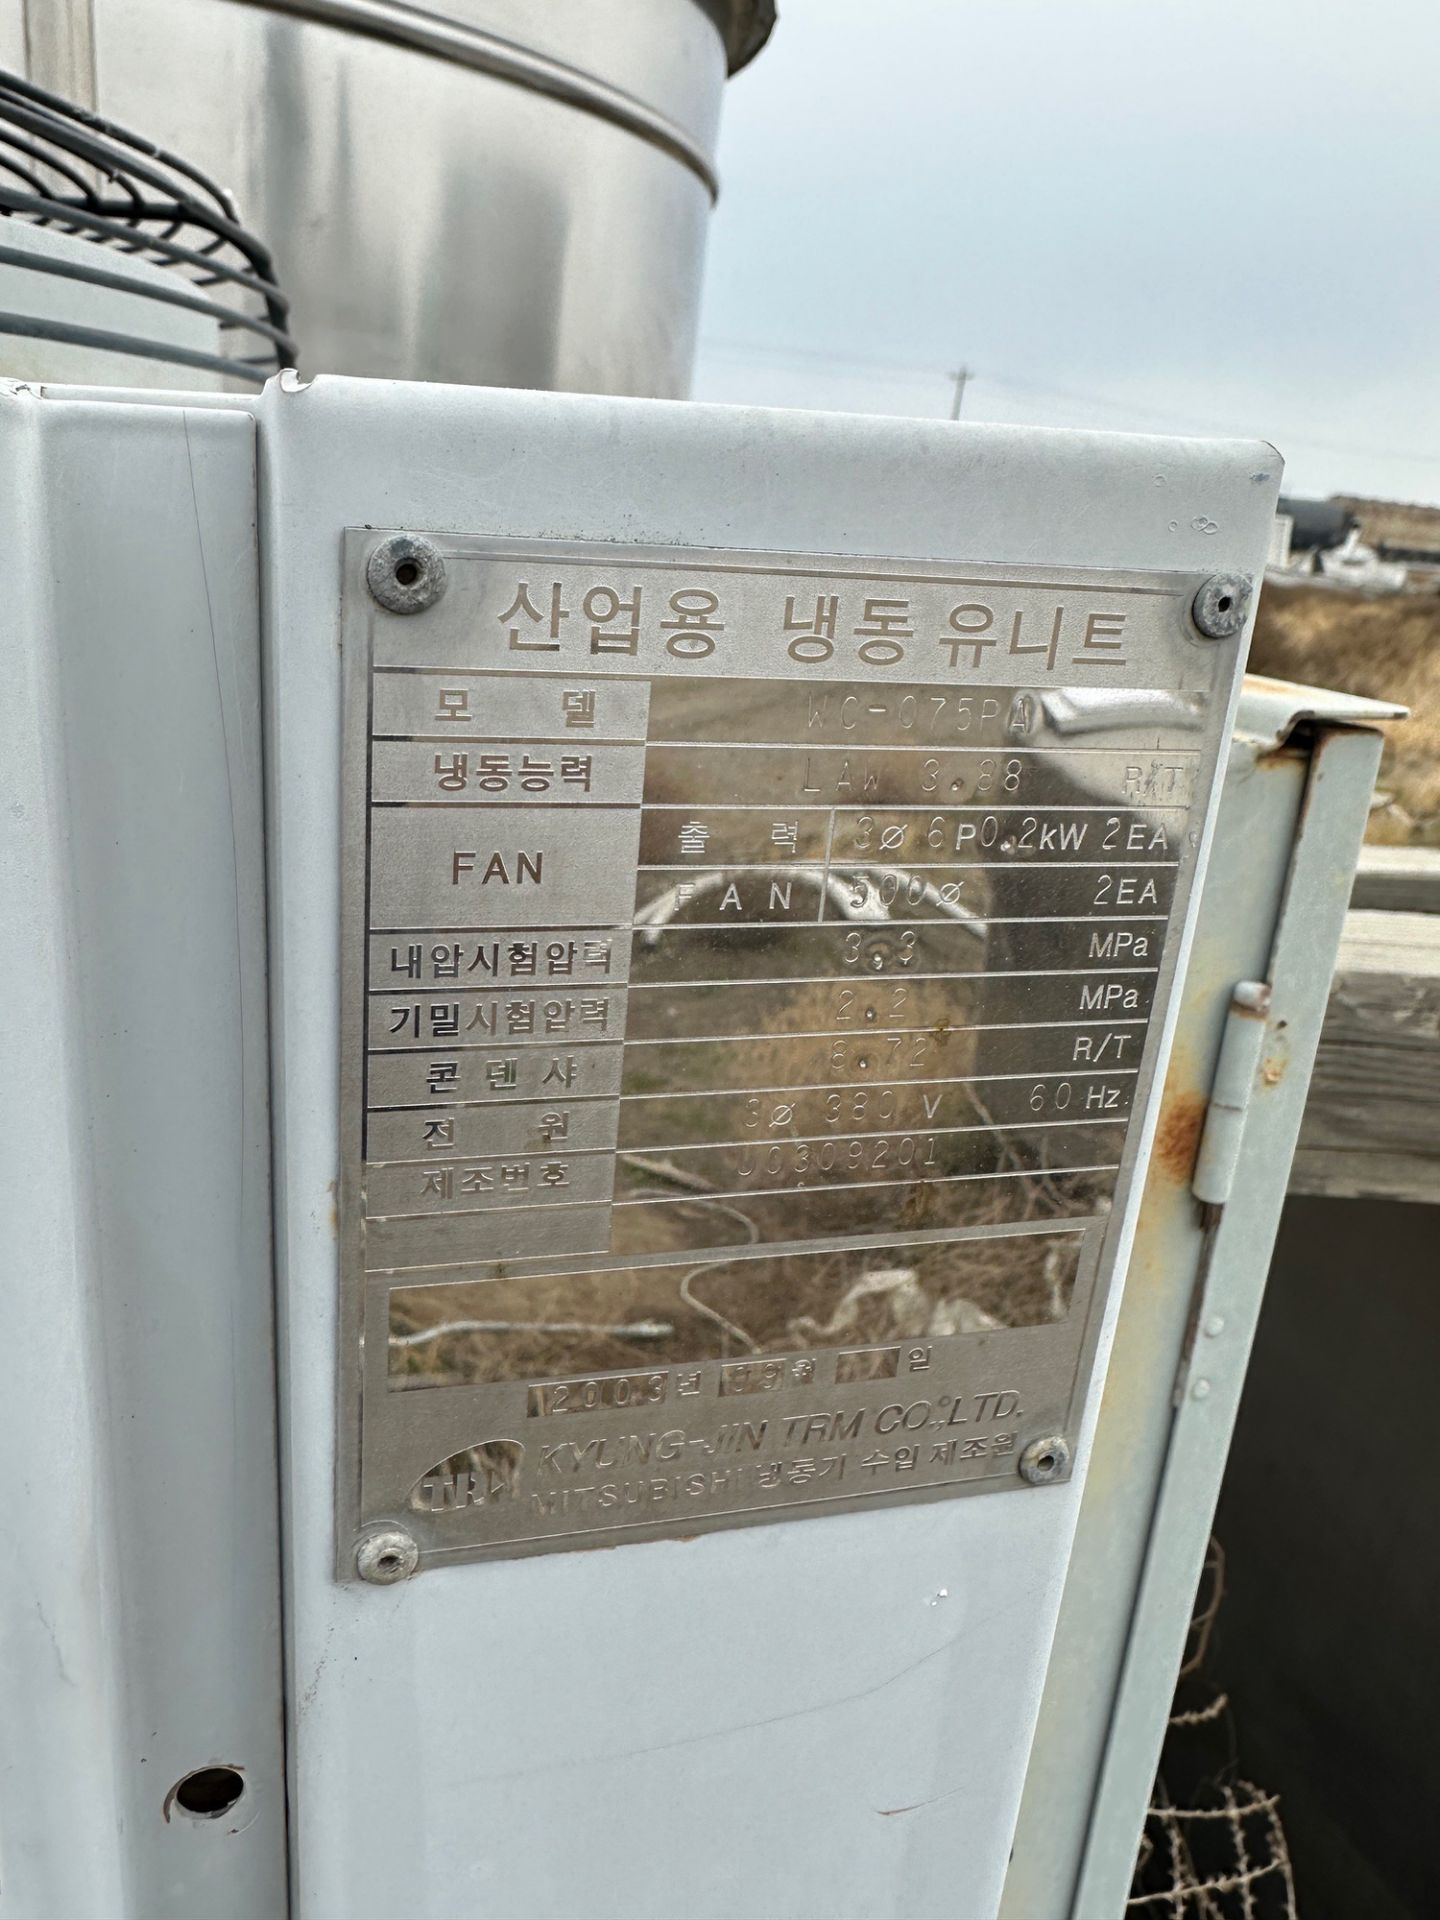 Mitsubishi Cooling Unit (Not Operational) | Rig Fee $225 - Image 3 of 4